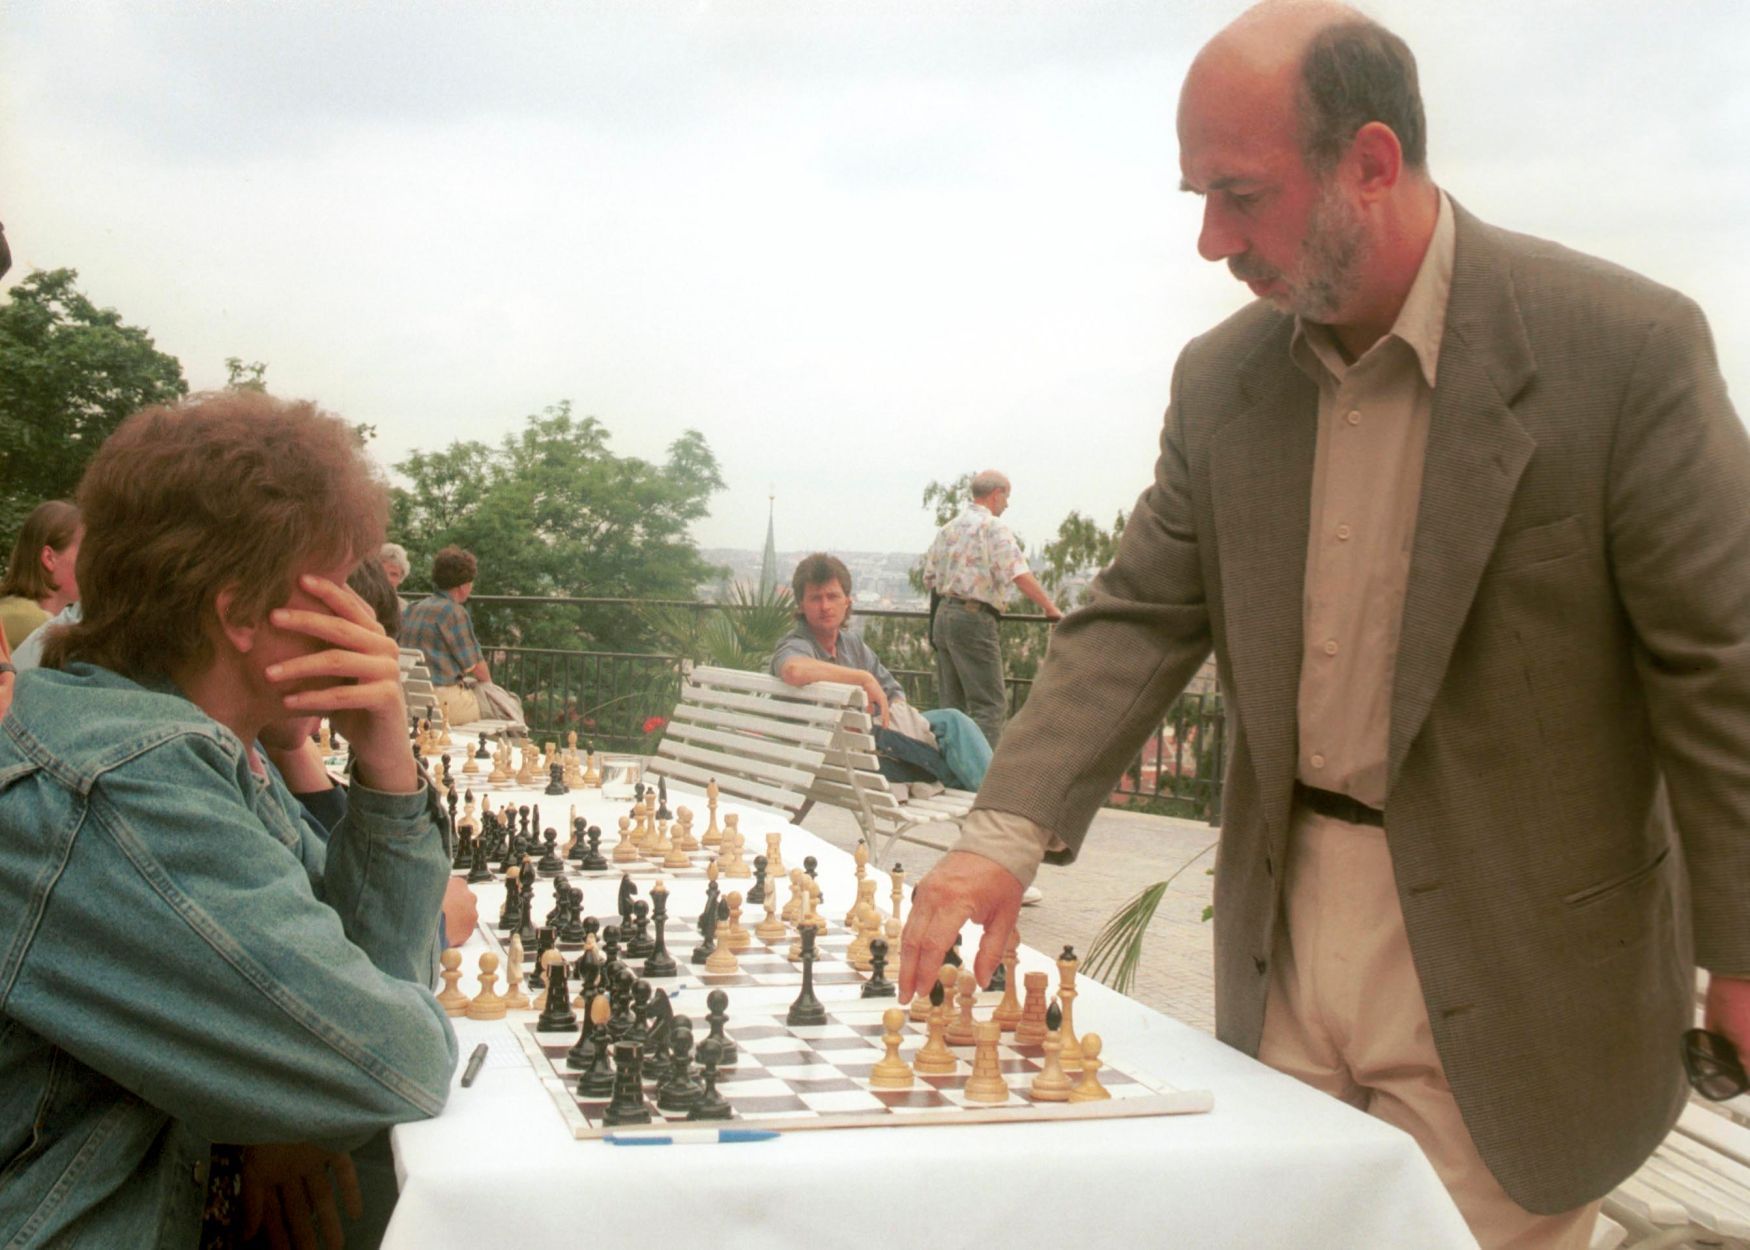 Šachový velmistr Lubomír Kaválek